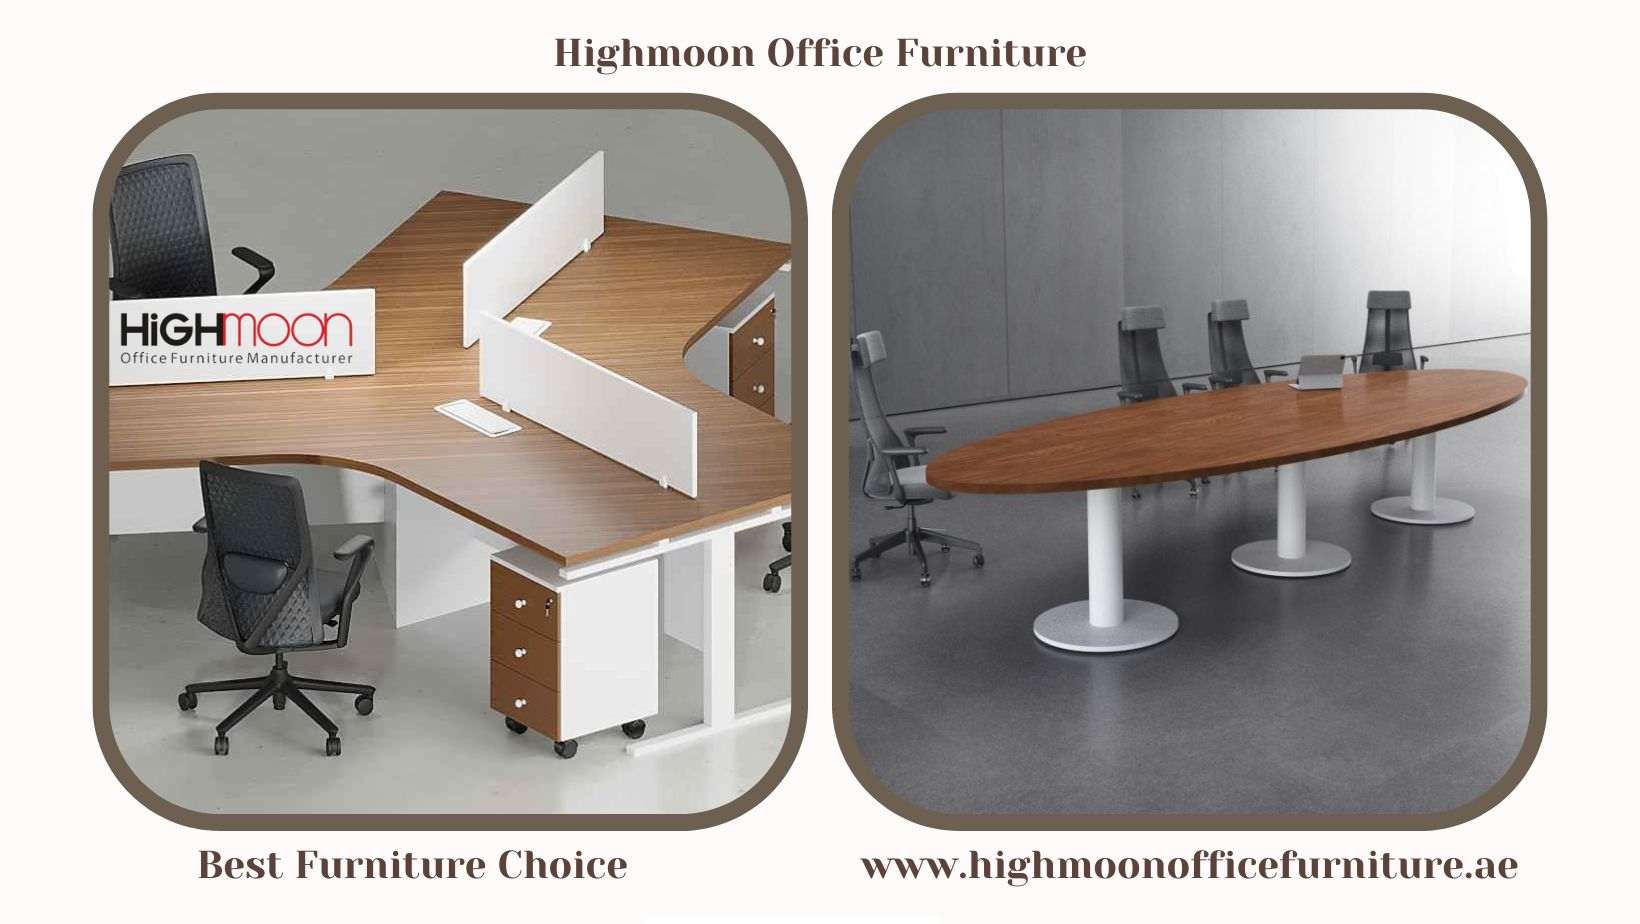 Highmoon Office Furniture - Best Furniture Choice